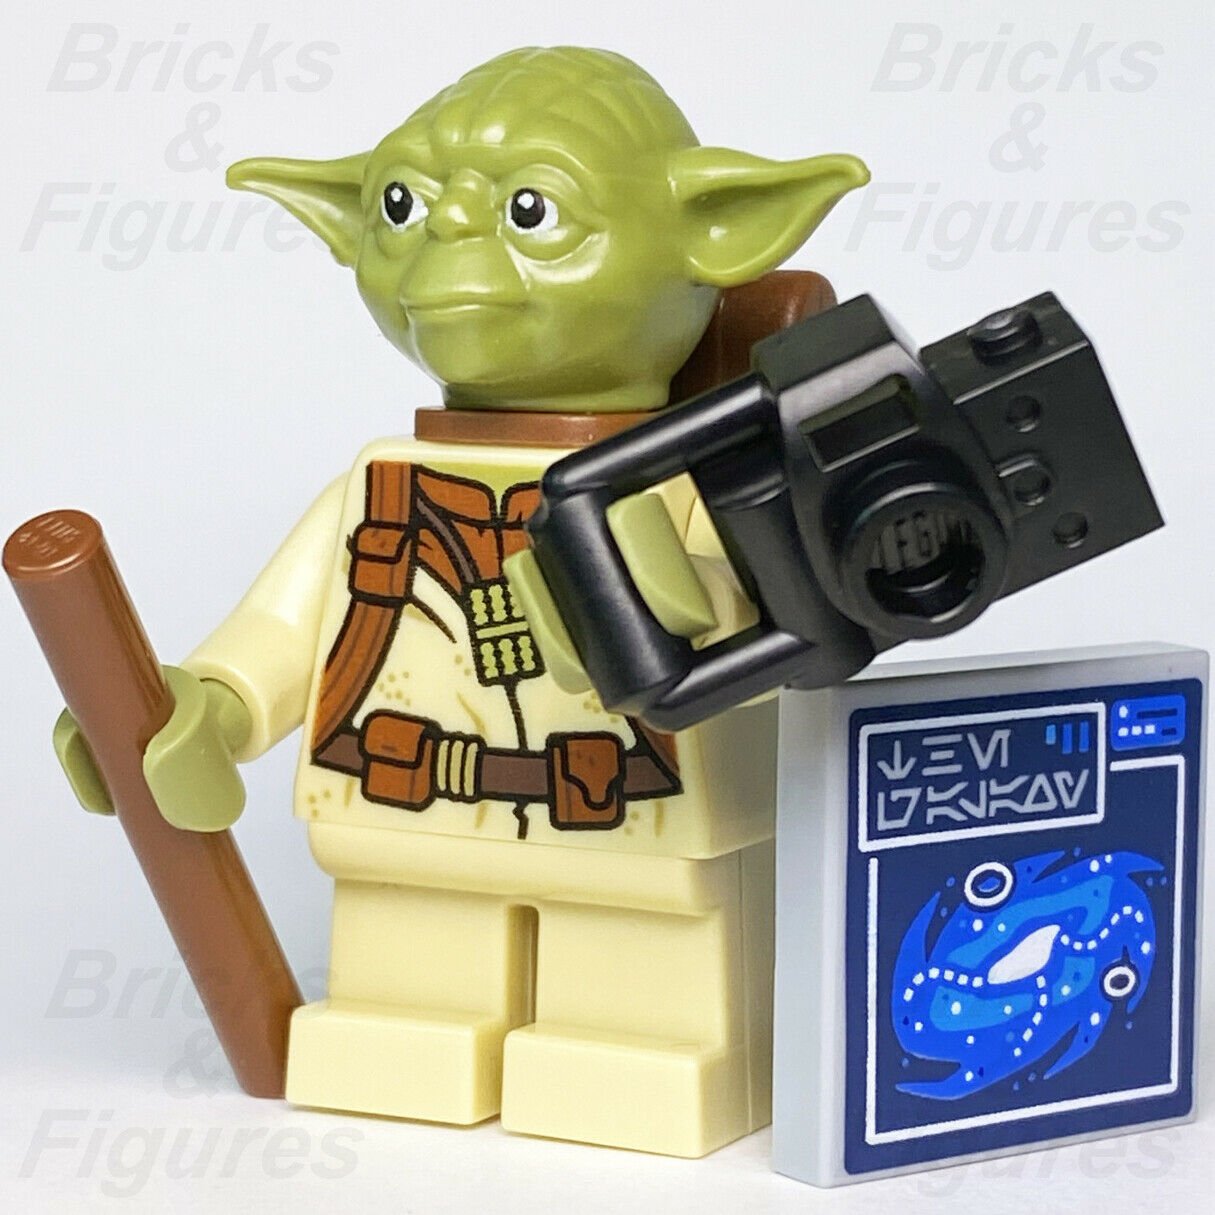 LEGO Star Wars Minifigures Lot of 2 Grogu Baby Yoda Christmas Minifigure  75307